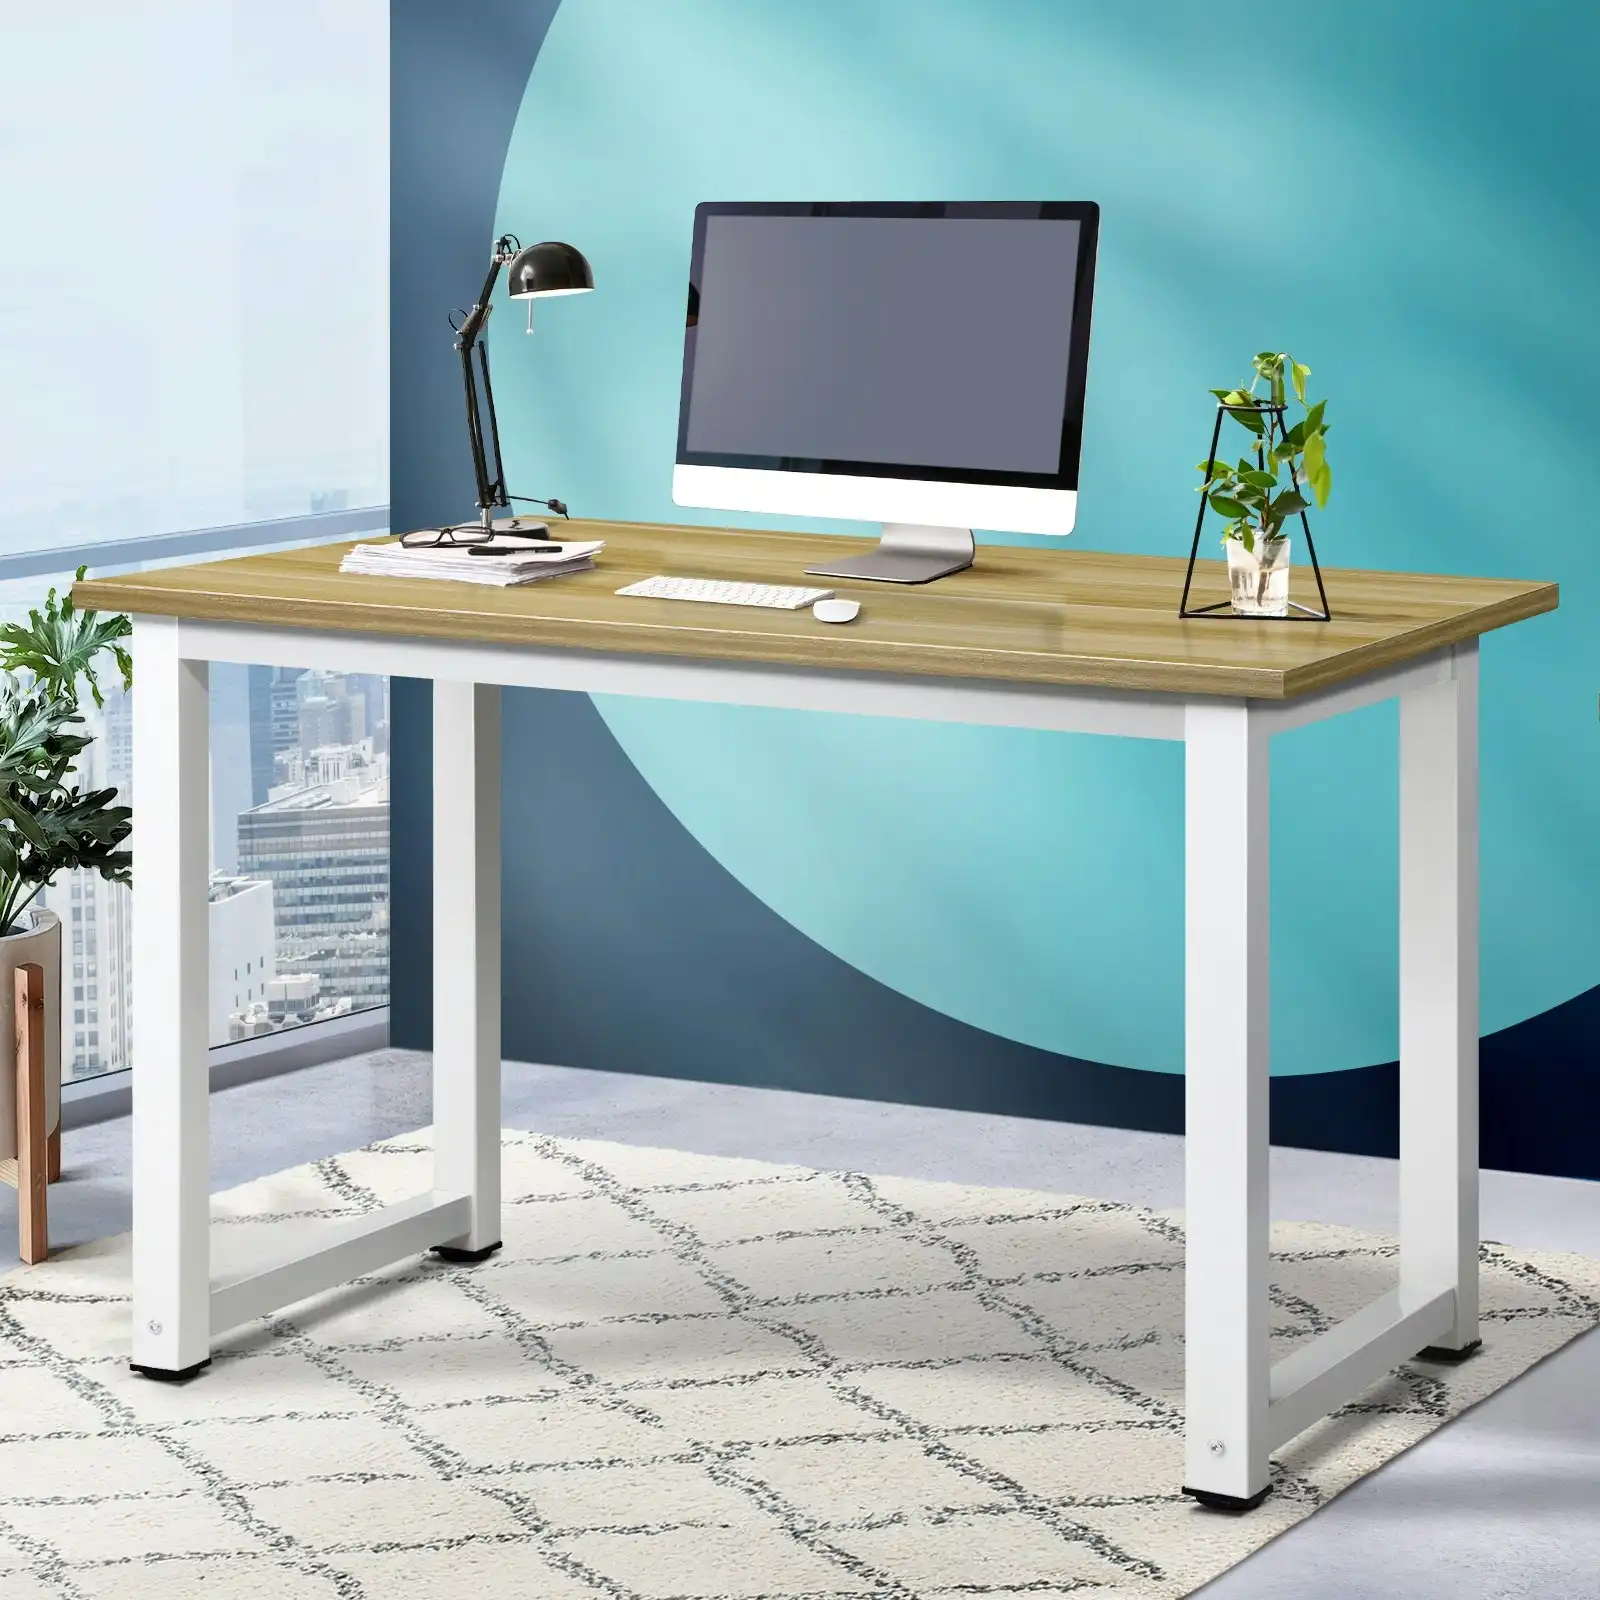 Oikiture Computer Desk Office Table Home Workstation Study Laptop Desks 120cm